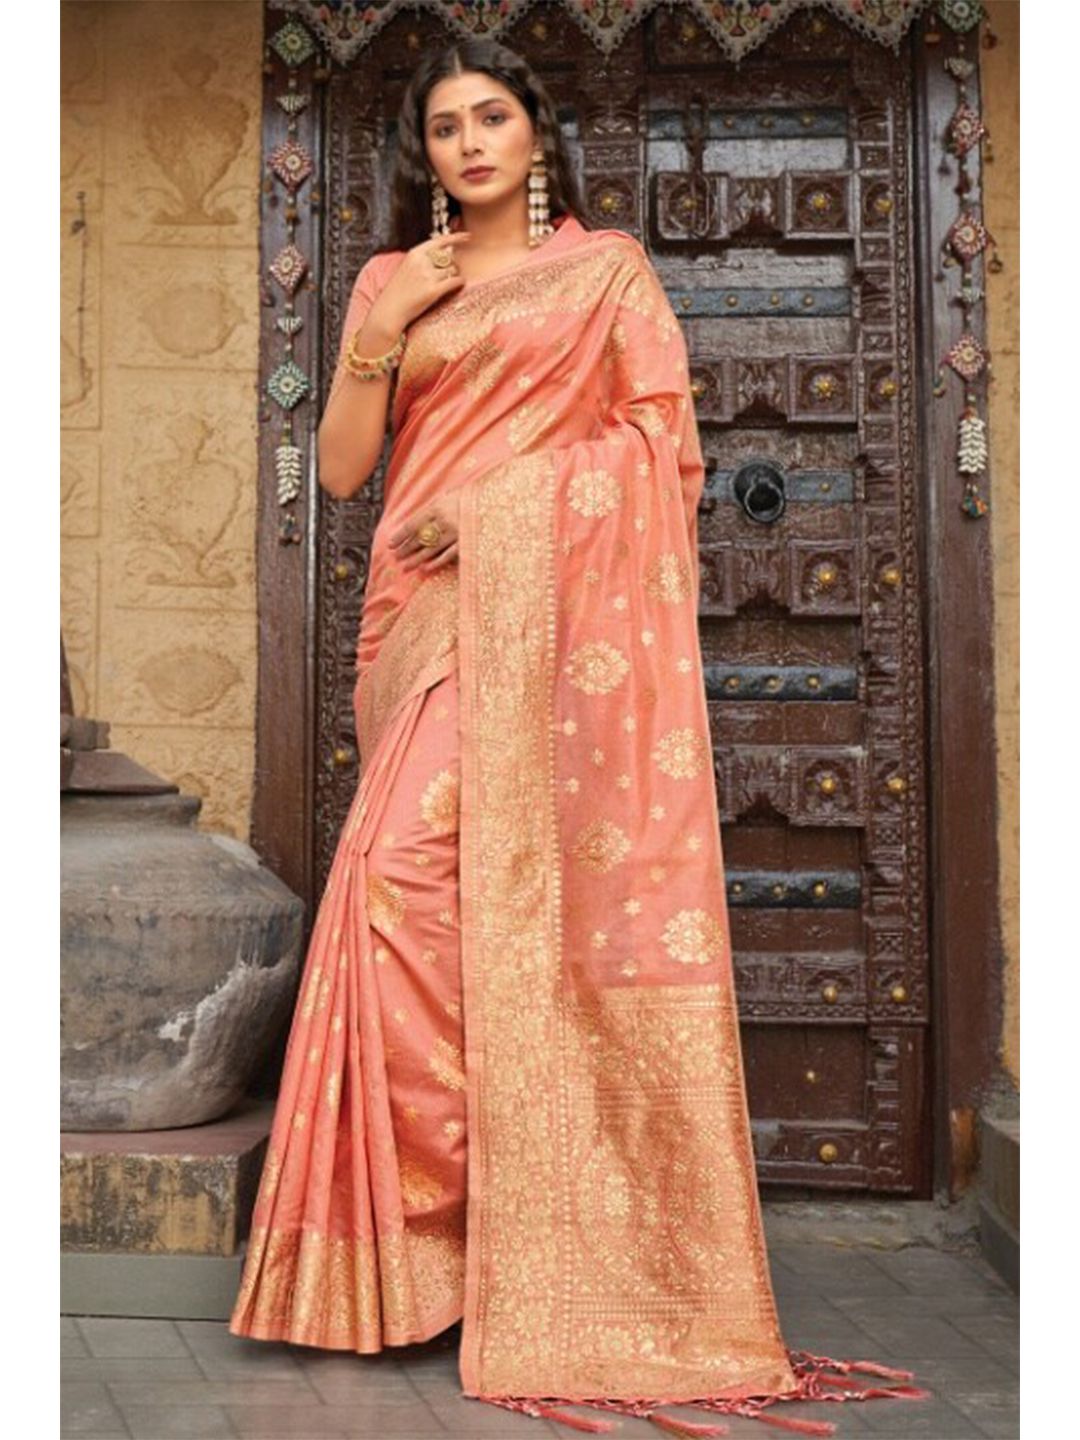 KARAGIRI Peach-Coloured & Gold-Toned Woven Design Zari Saree Price in India